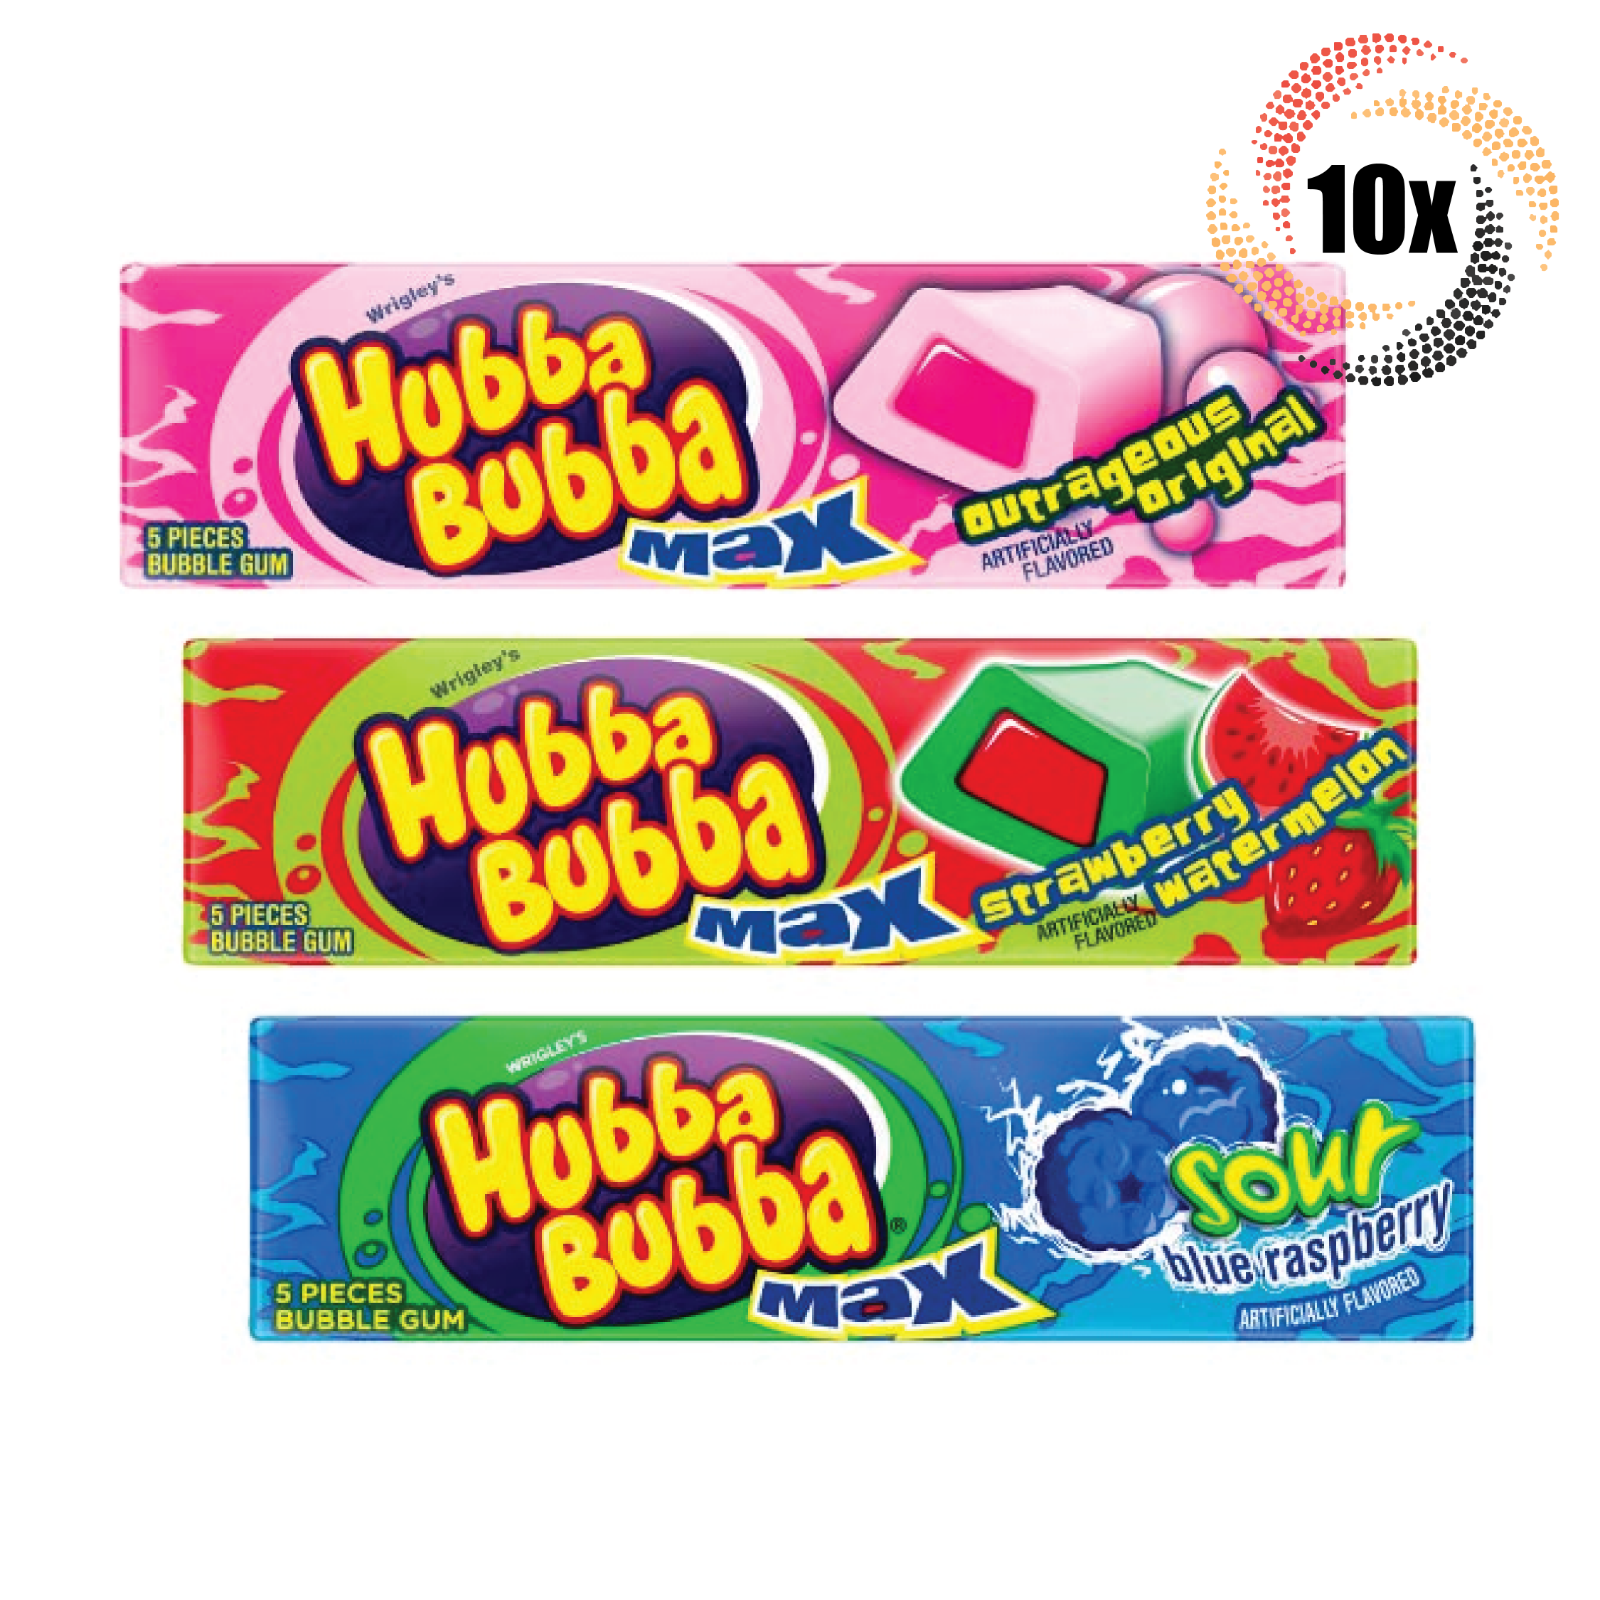 10x Packs Wrigley's Hubba Bubba Variety Bubble Gum ( 5 Piece Packs ) Mix & Match - $15.59